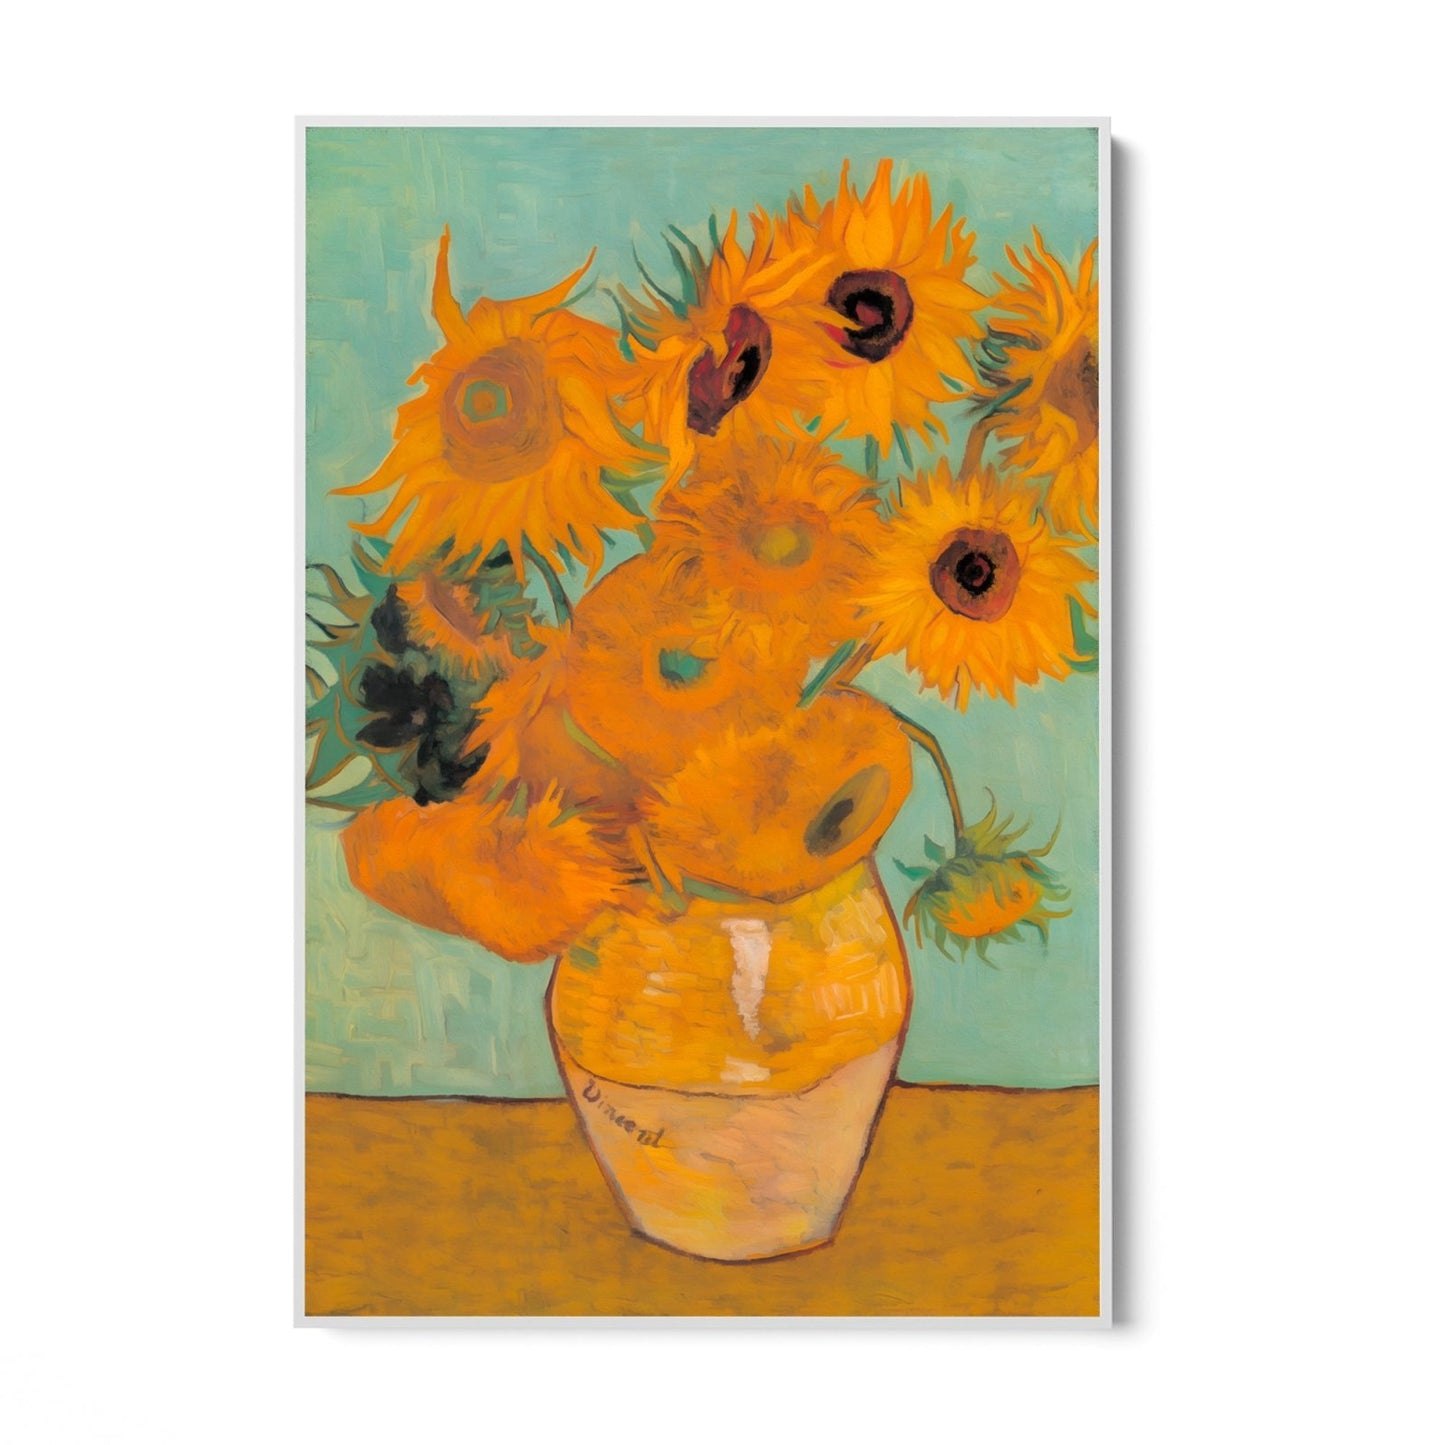 Suncokreti II, Vincent Van Gogh